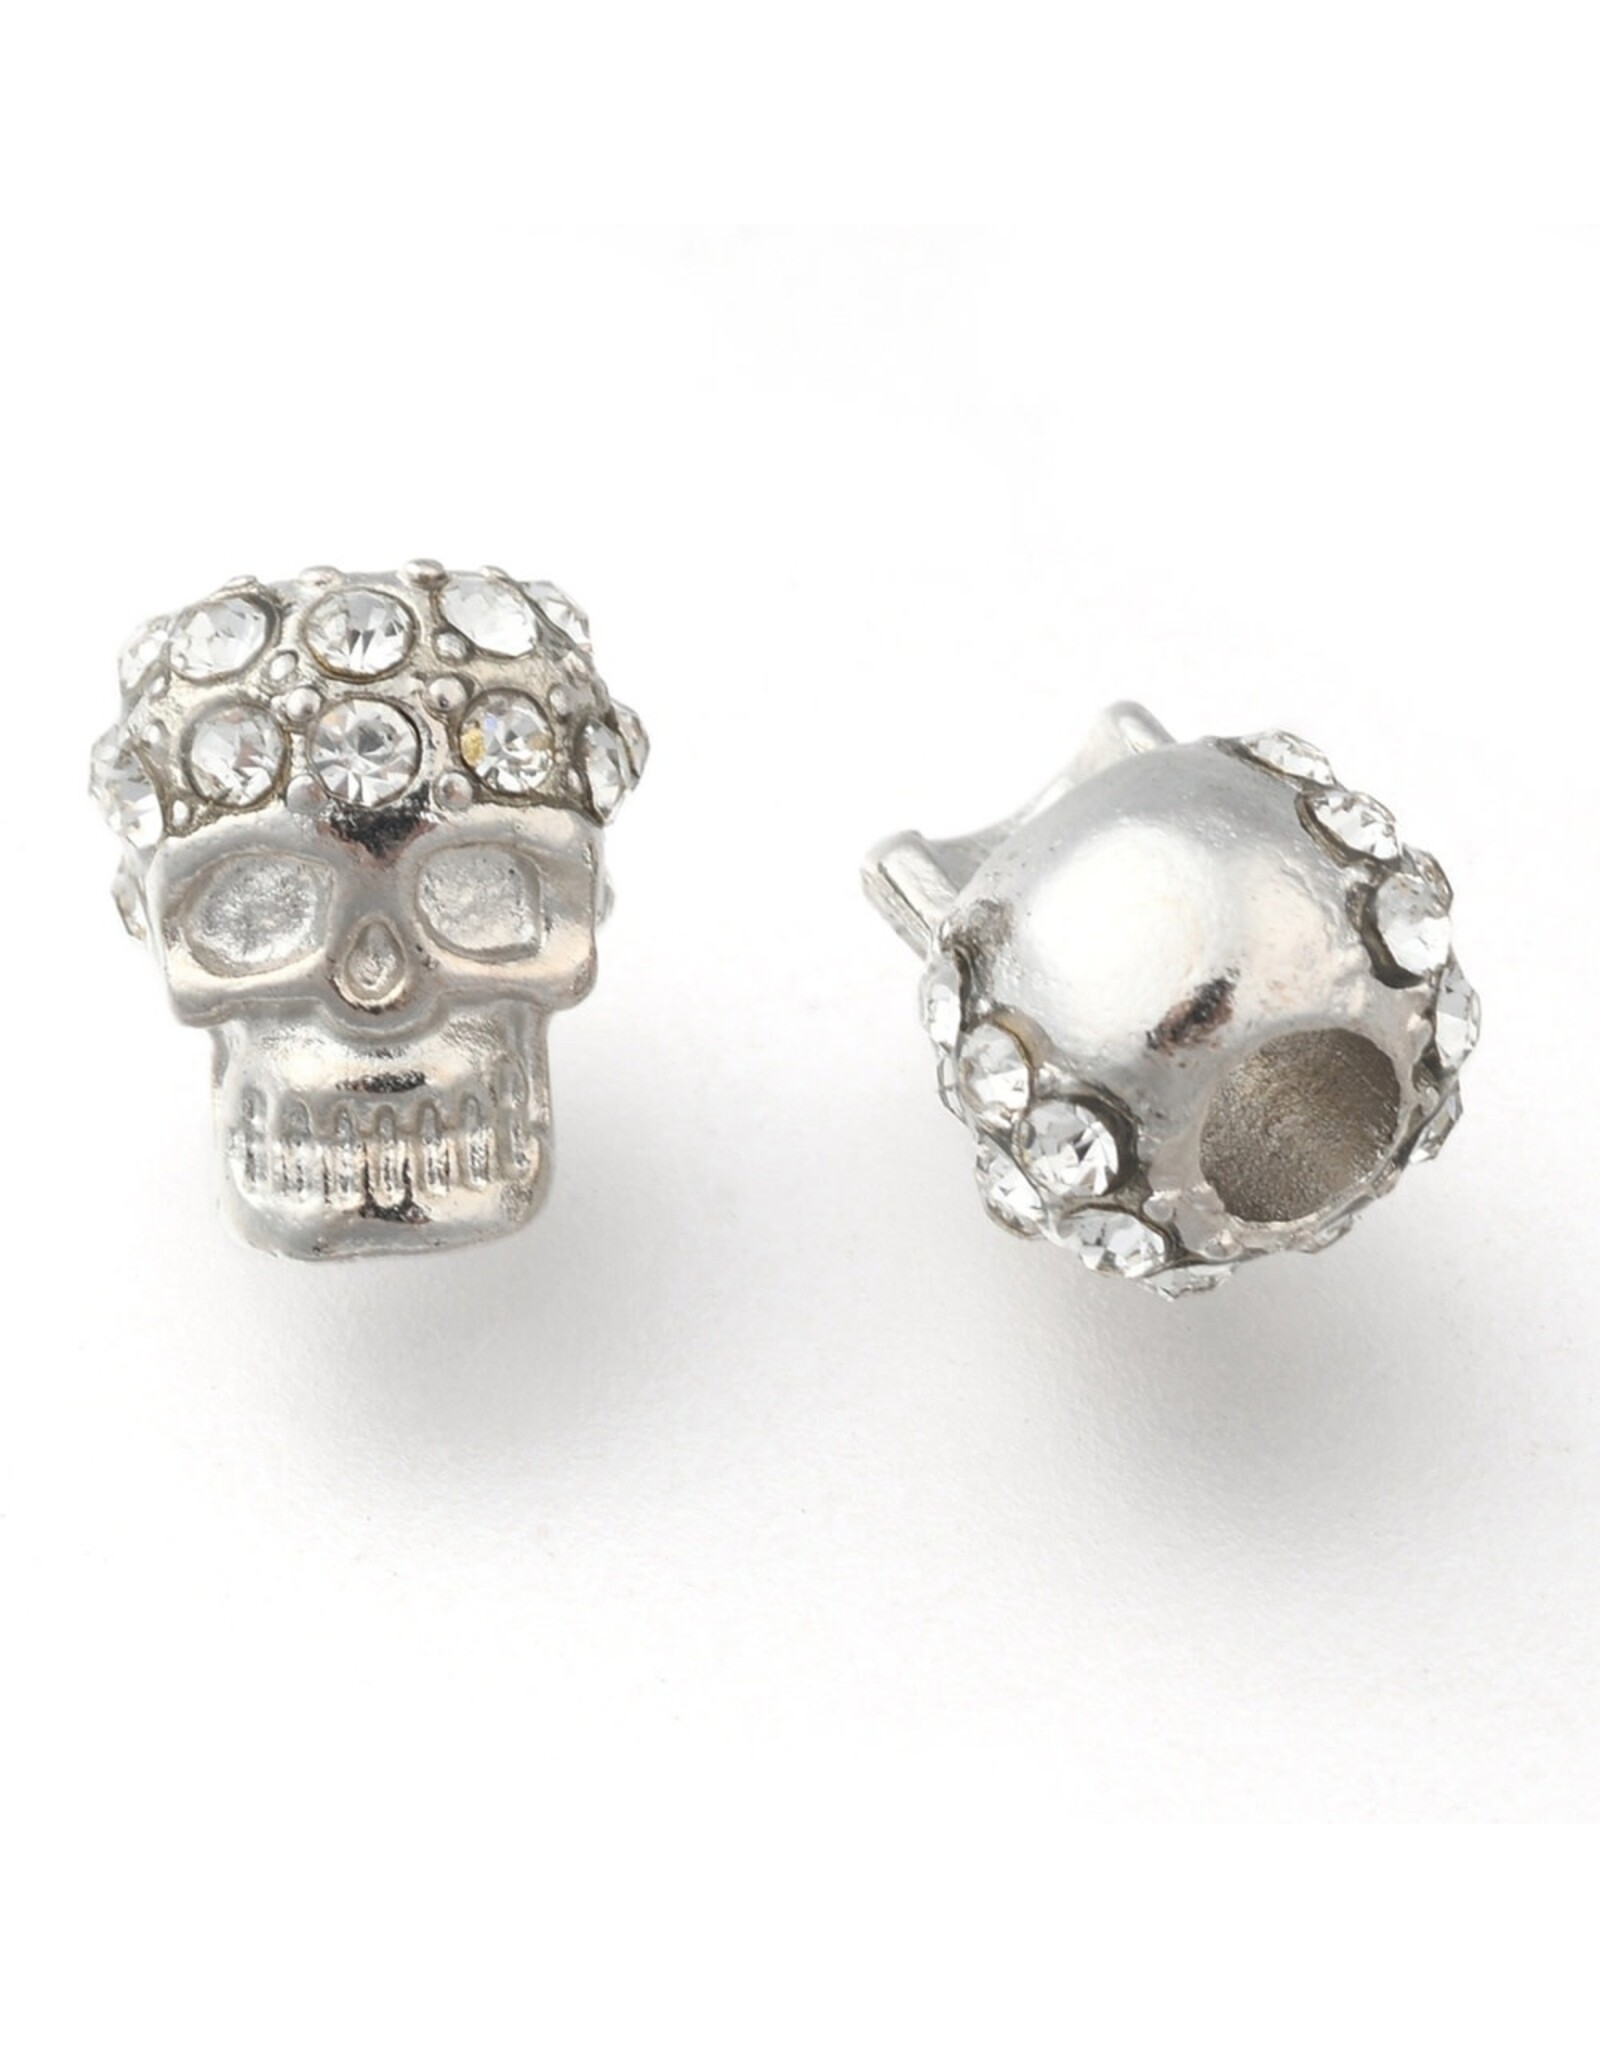 Skull Bead Silver with Rhinestones 12x8mm  x6